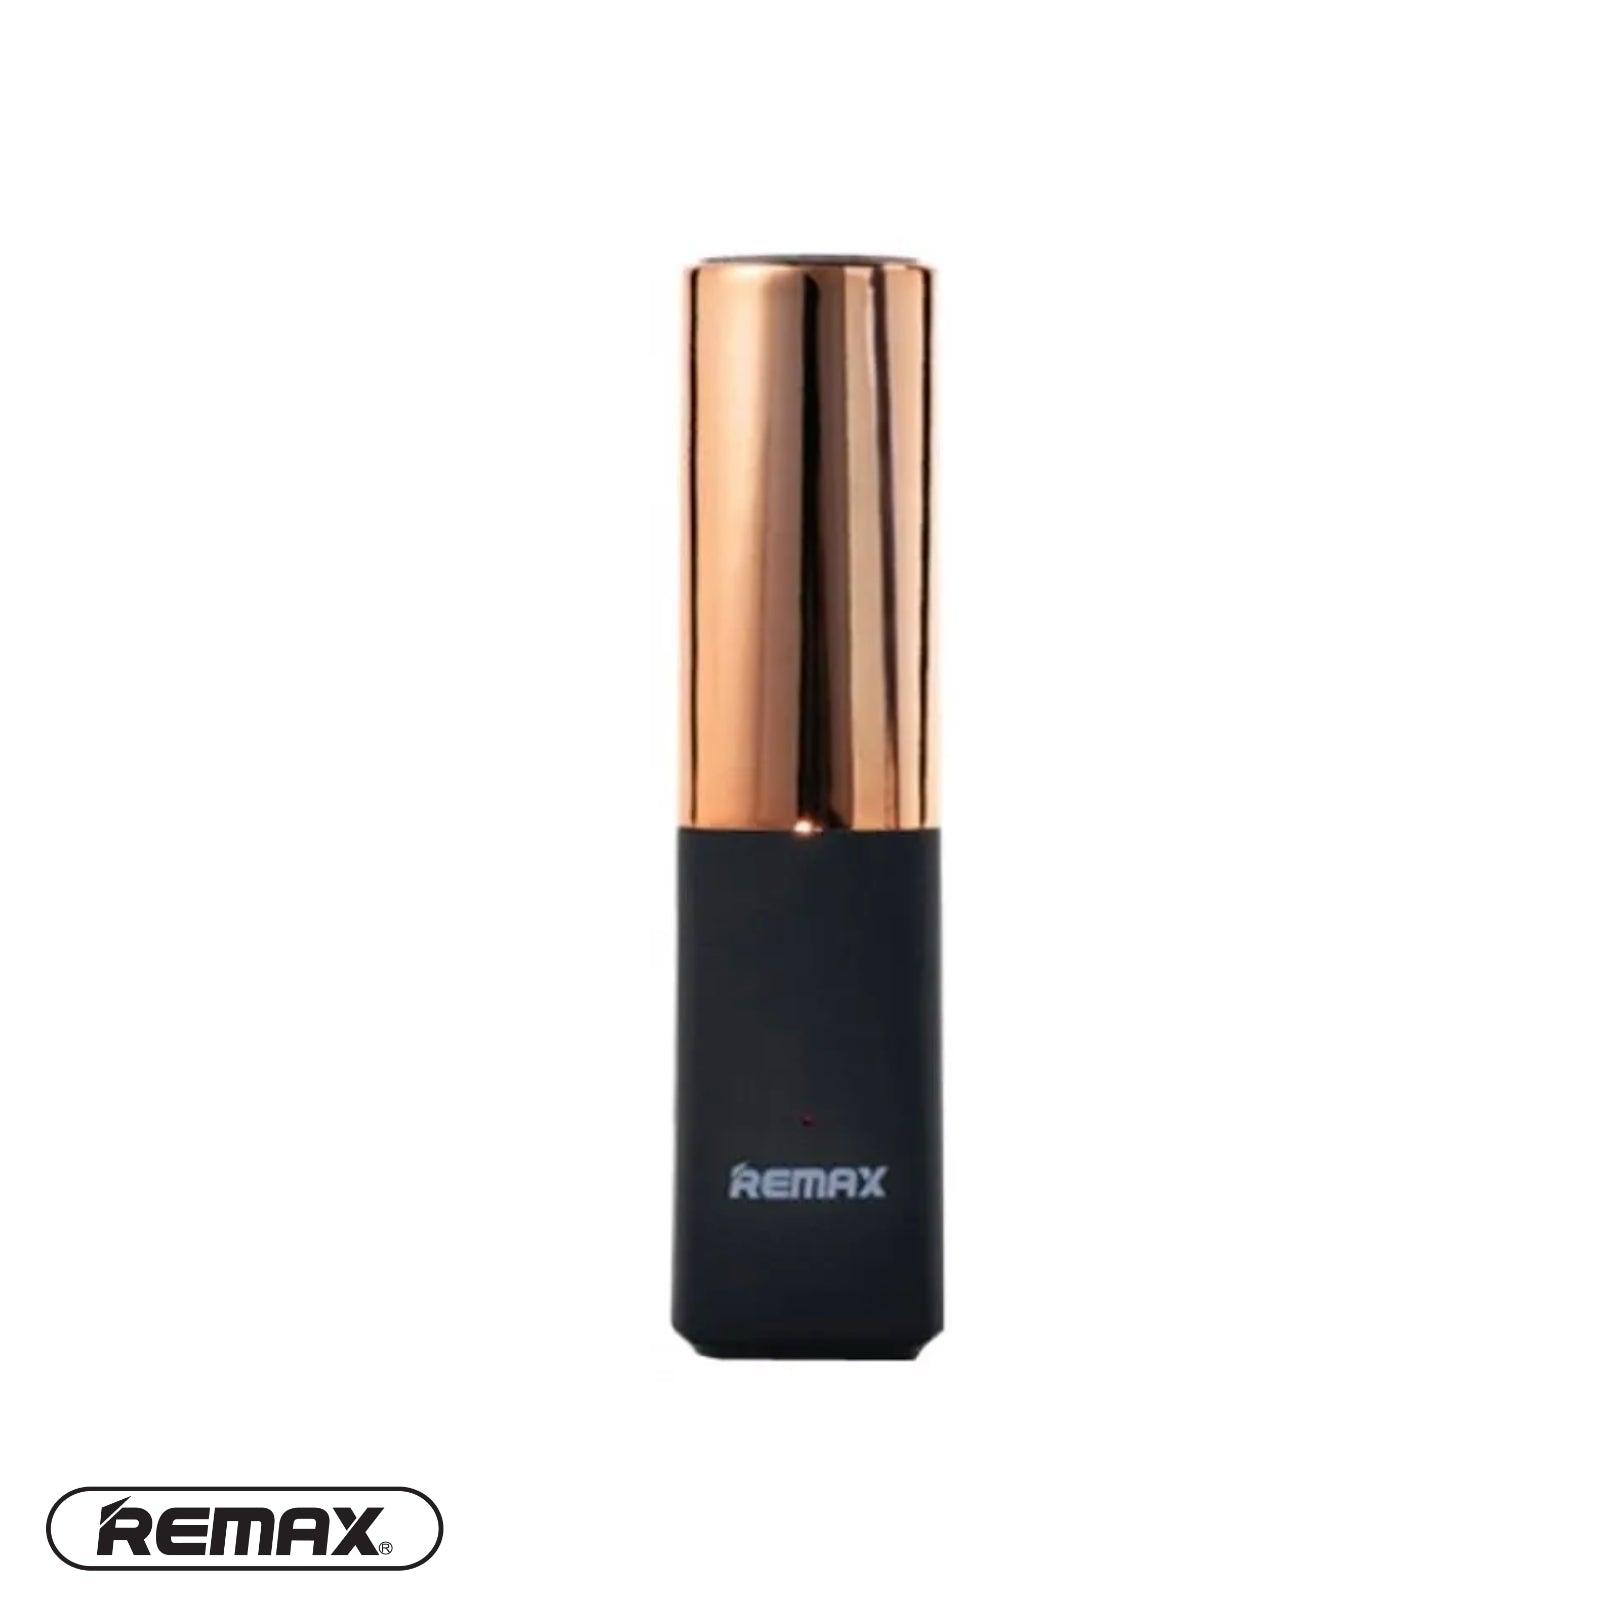 Selected image for Преносна мобилна Батерија  remax lipmax rpl 12 2400 mah